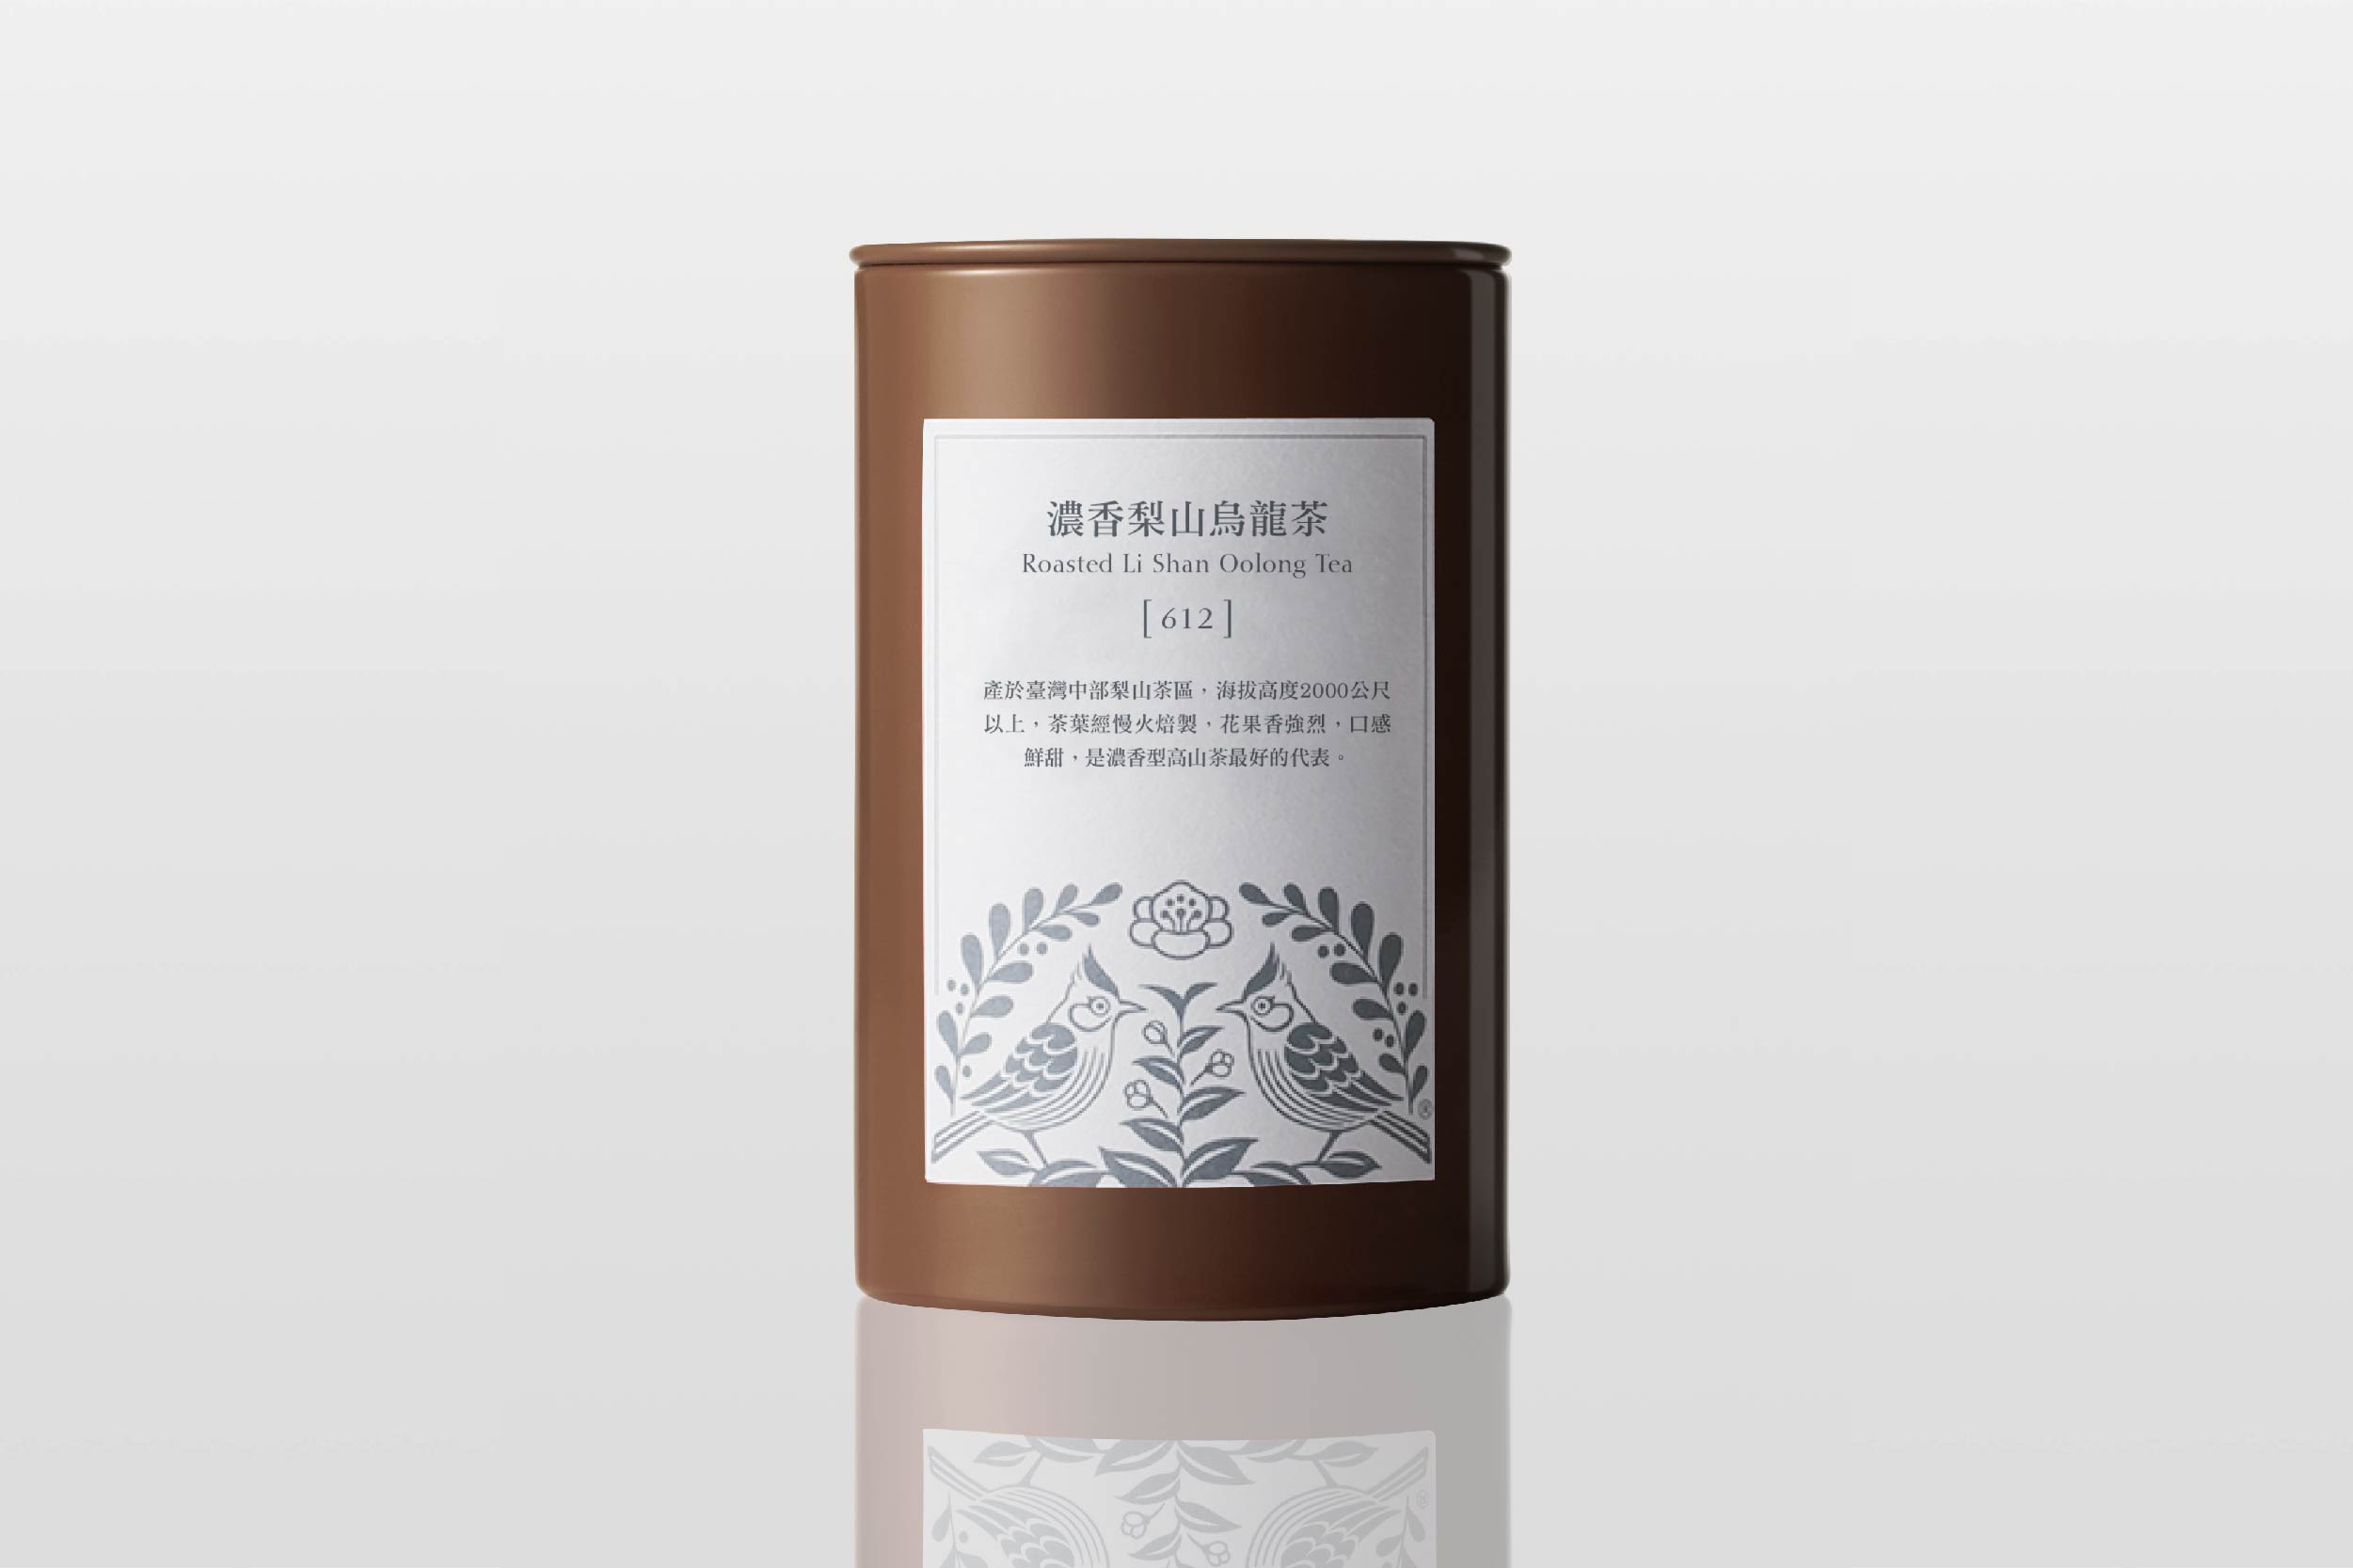 Roasted Li Shan Oolong Tea